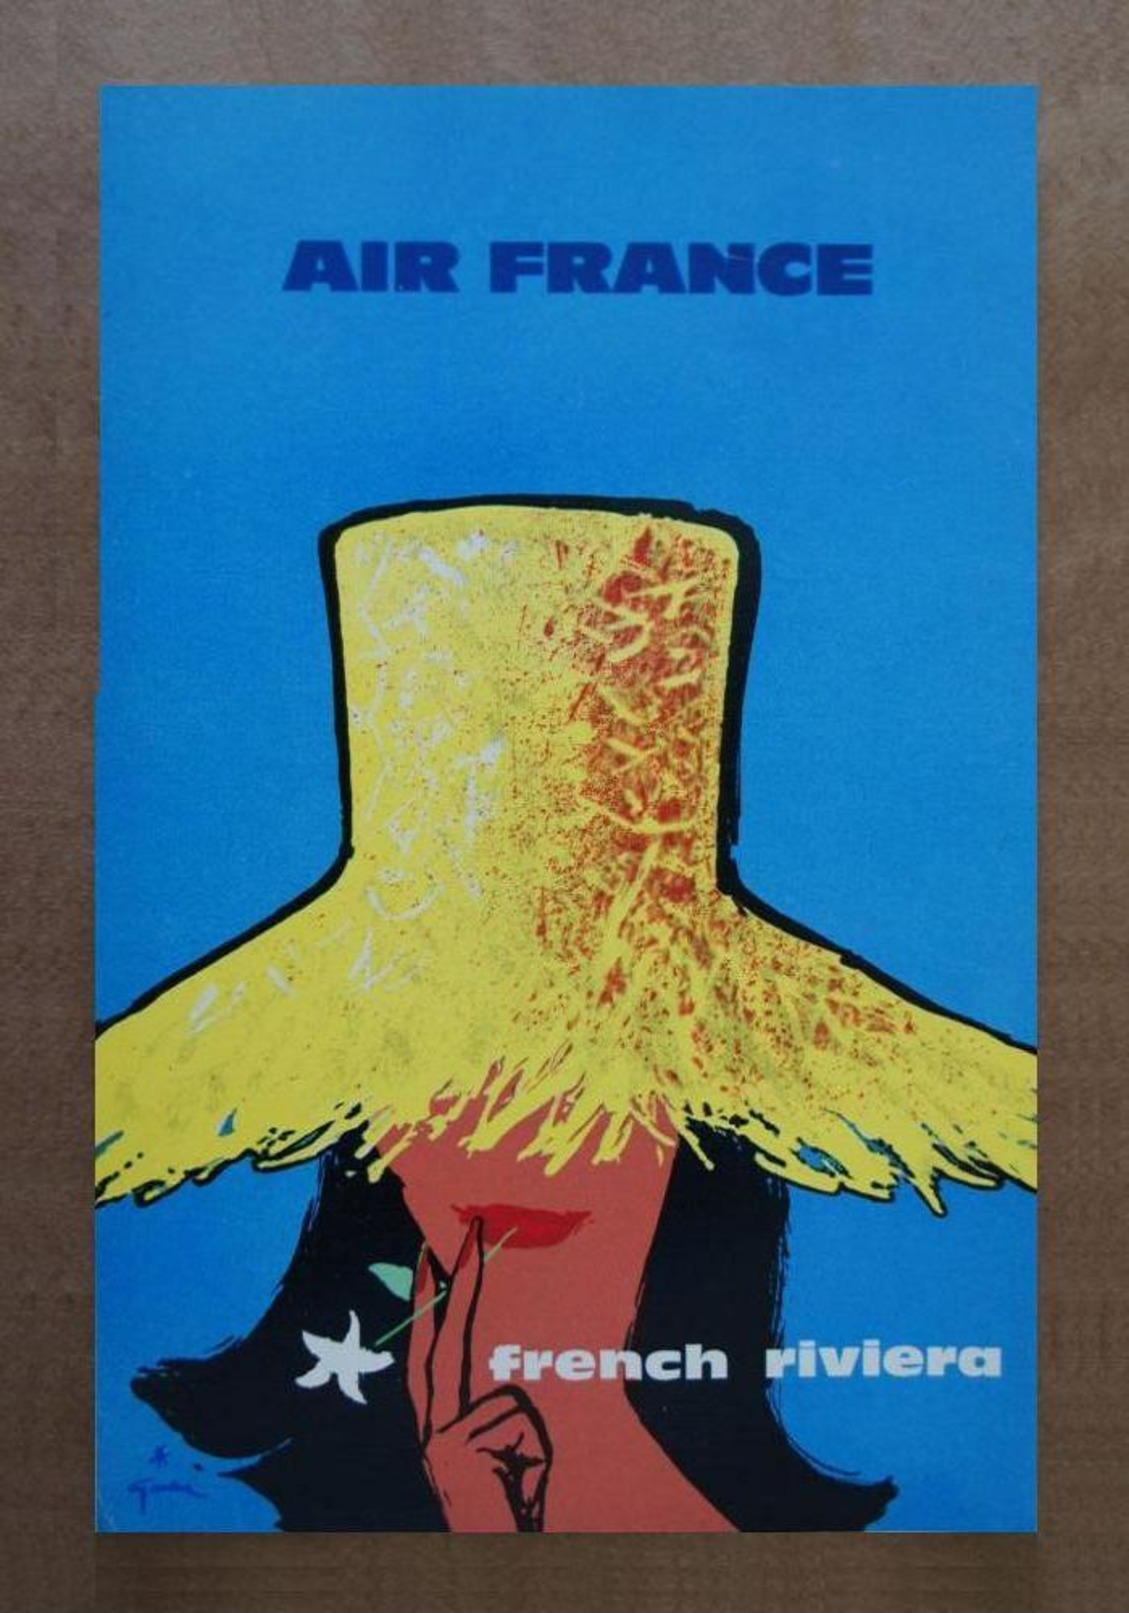 Air France French Riviera 1960s - Postcard - Poster Reproduction - Publicité